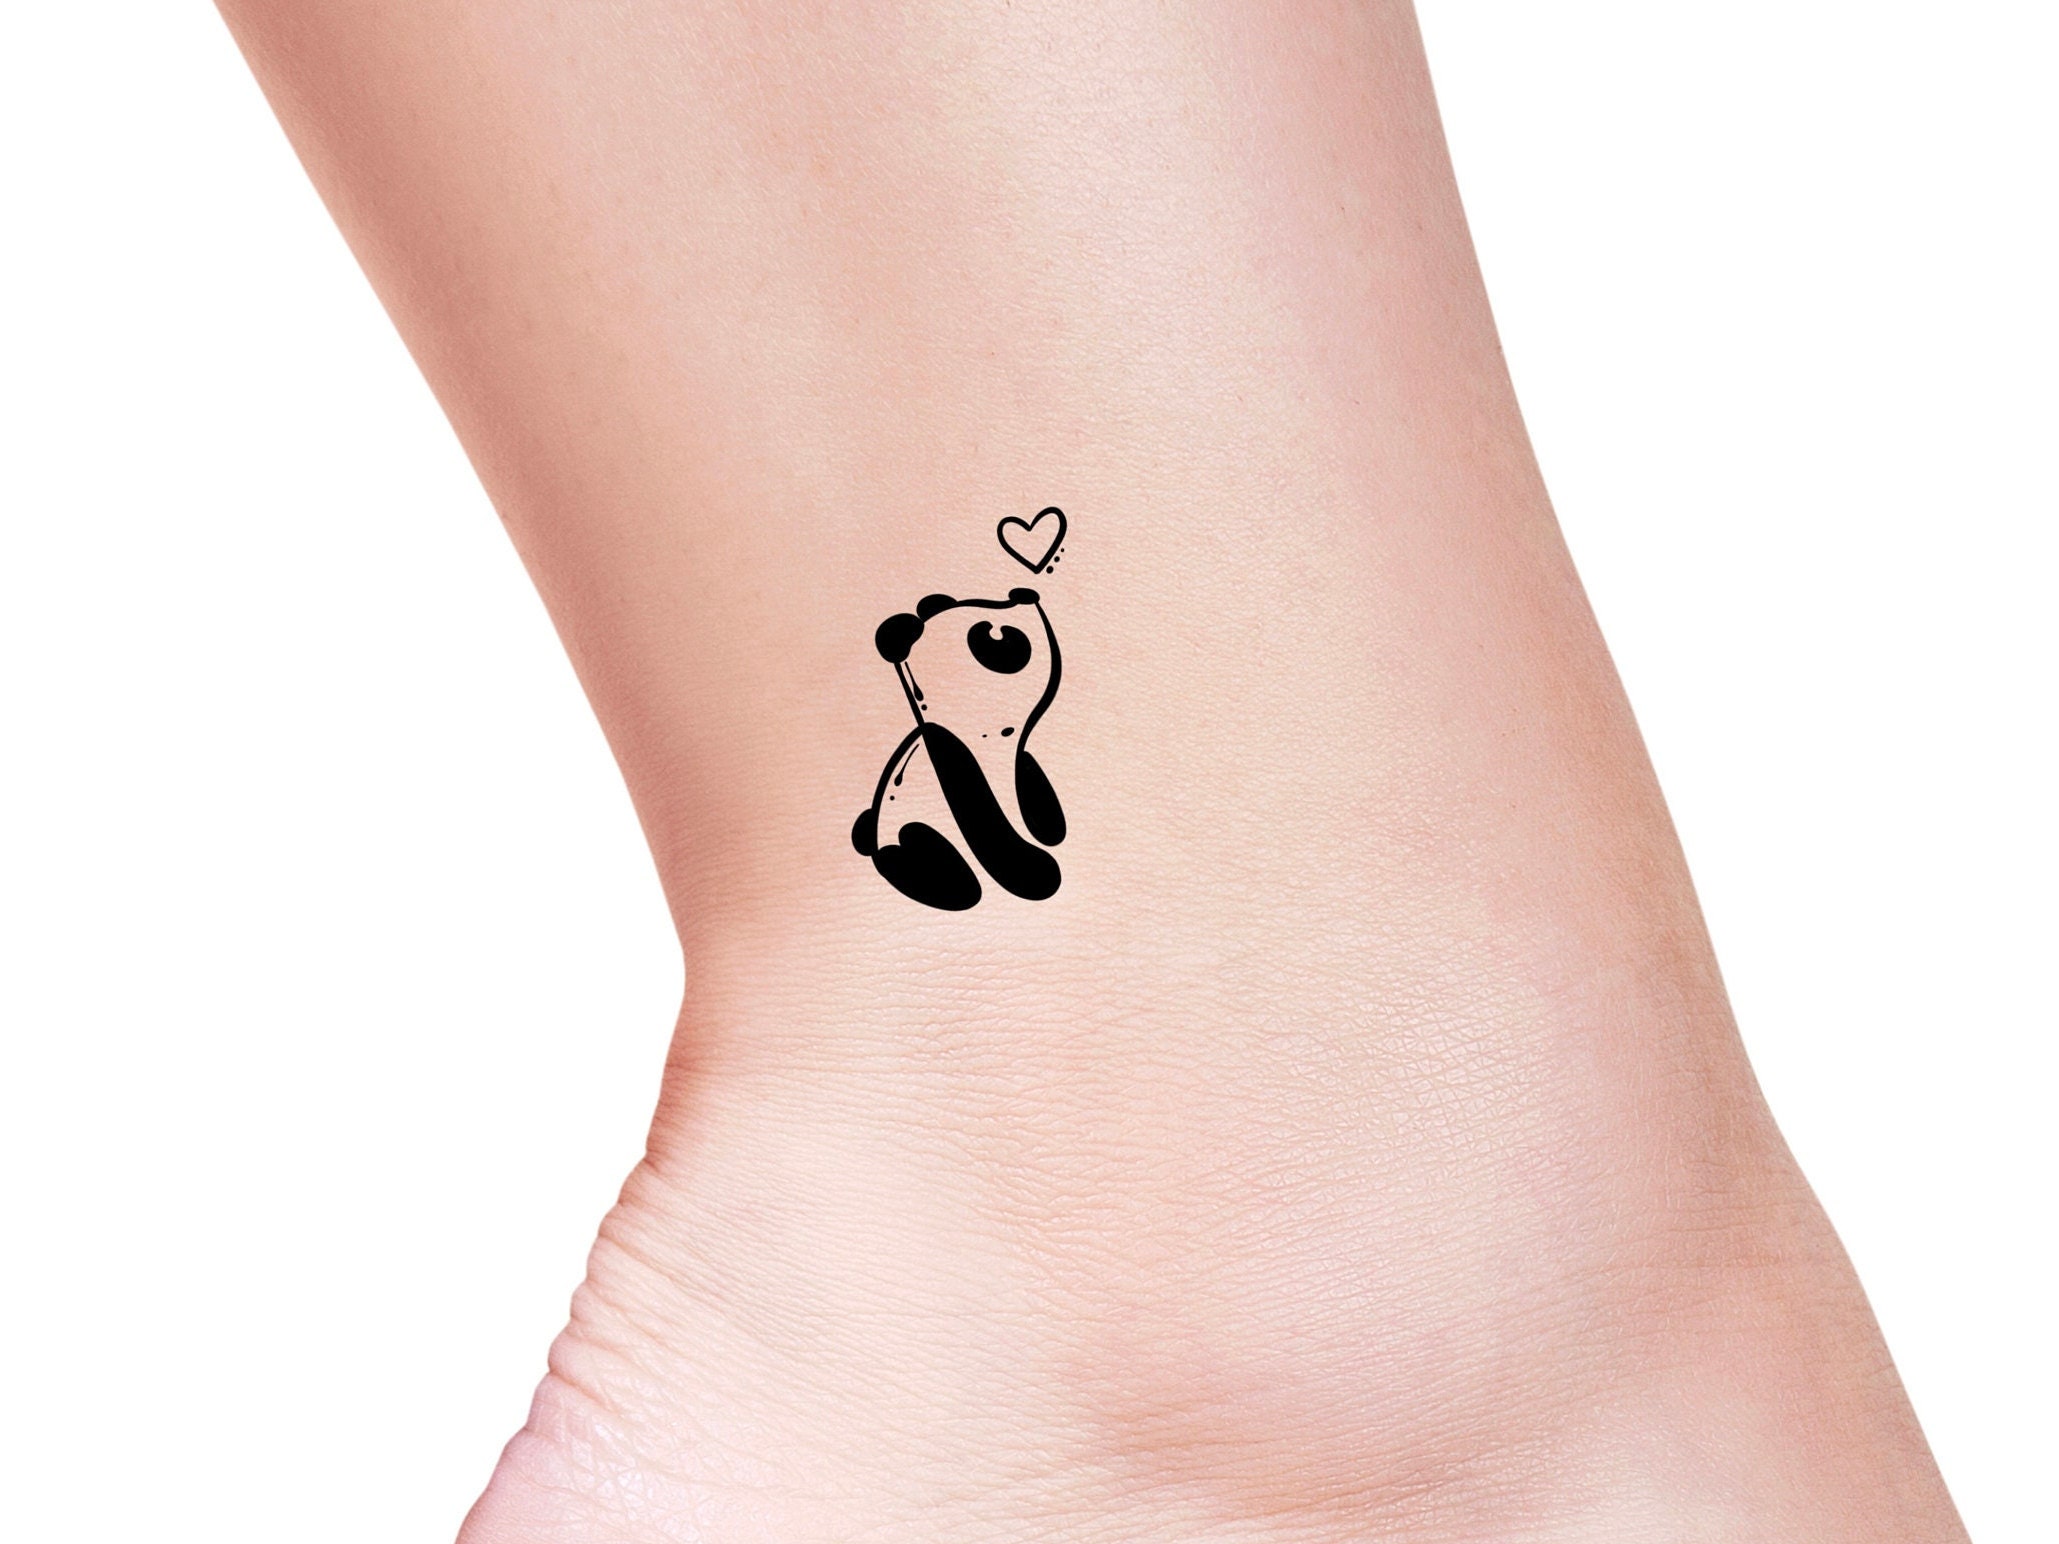 101 Amazing Panda Tattoo Ideas You Need To See! | Panda tattoo, Tattoos,  Bear tattoos